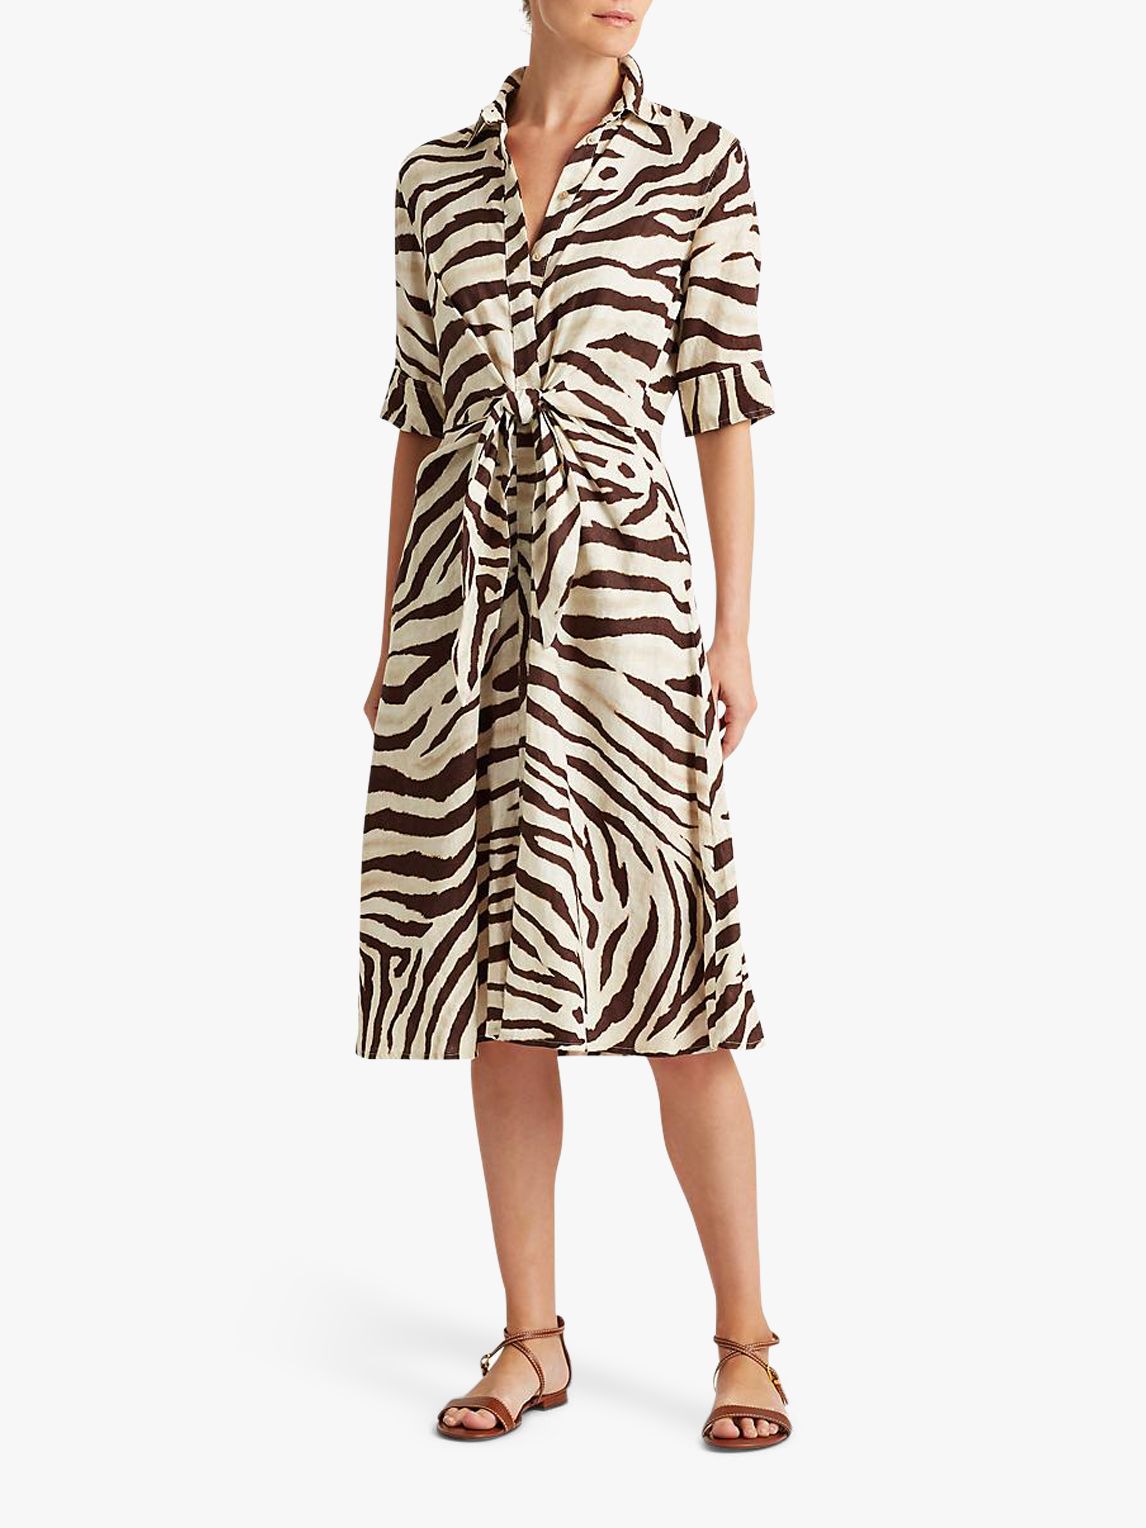 Lauren Ralph Lauren Zebra Stripe Shirt Dress, Dark Brown/Multi